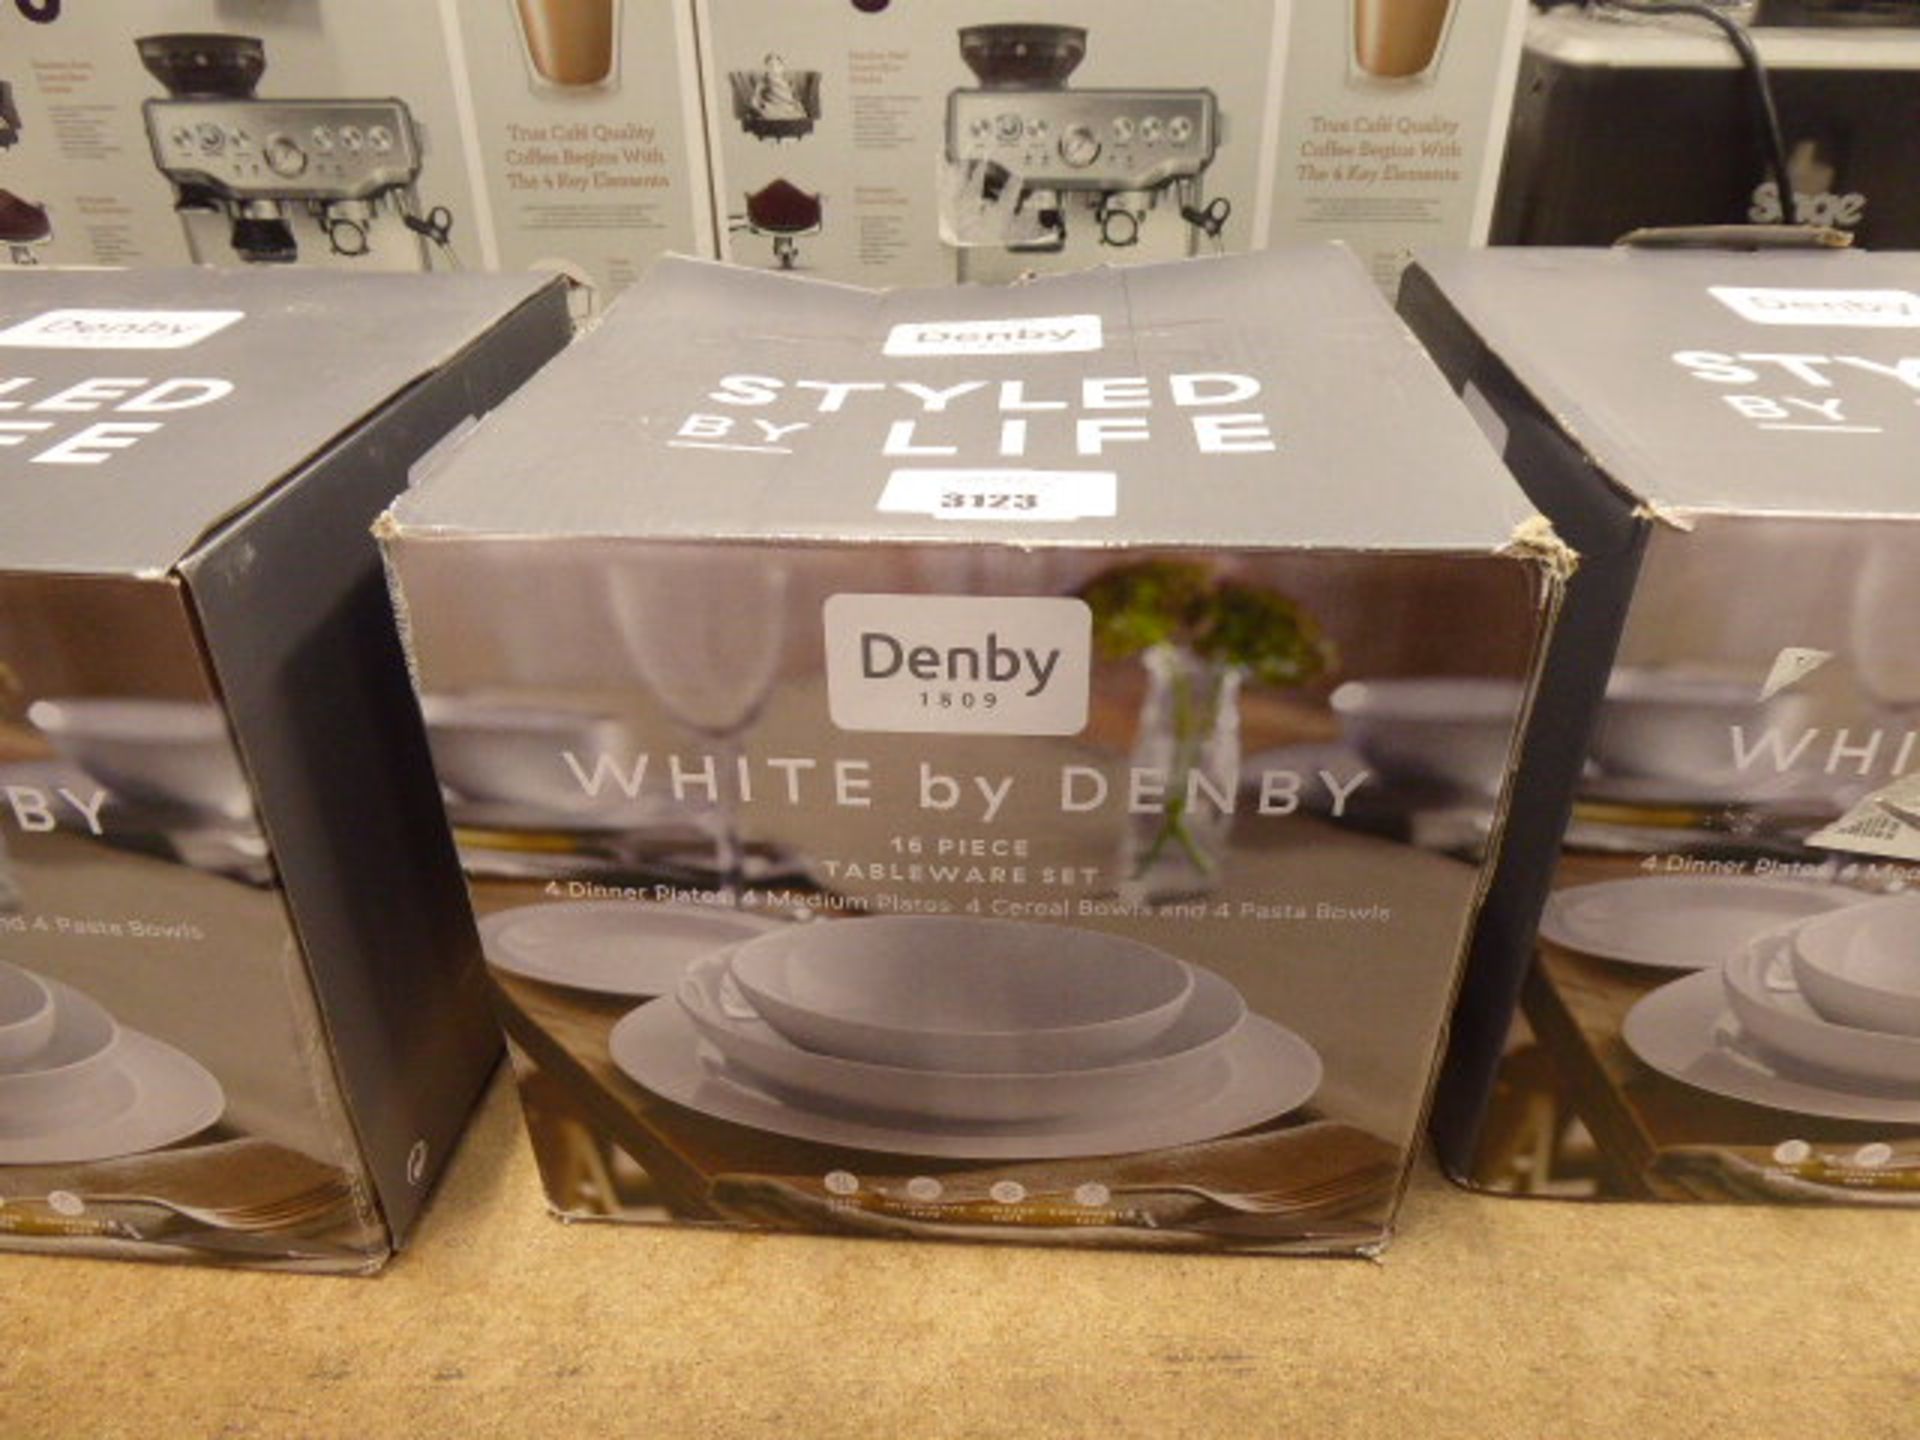 Boxed Denby tableware set